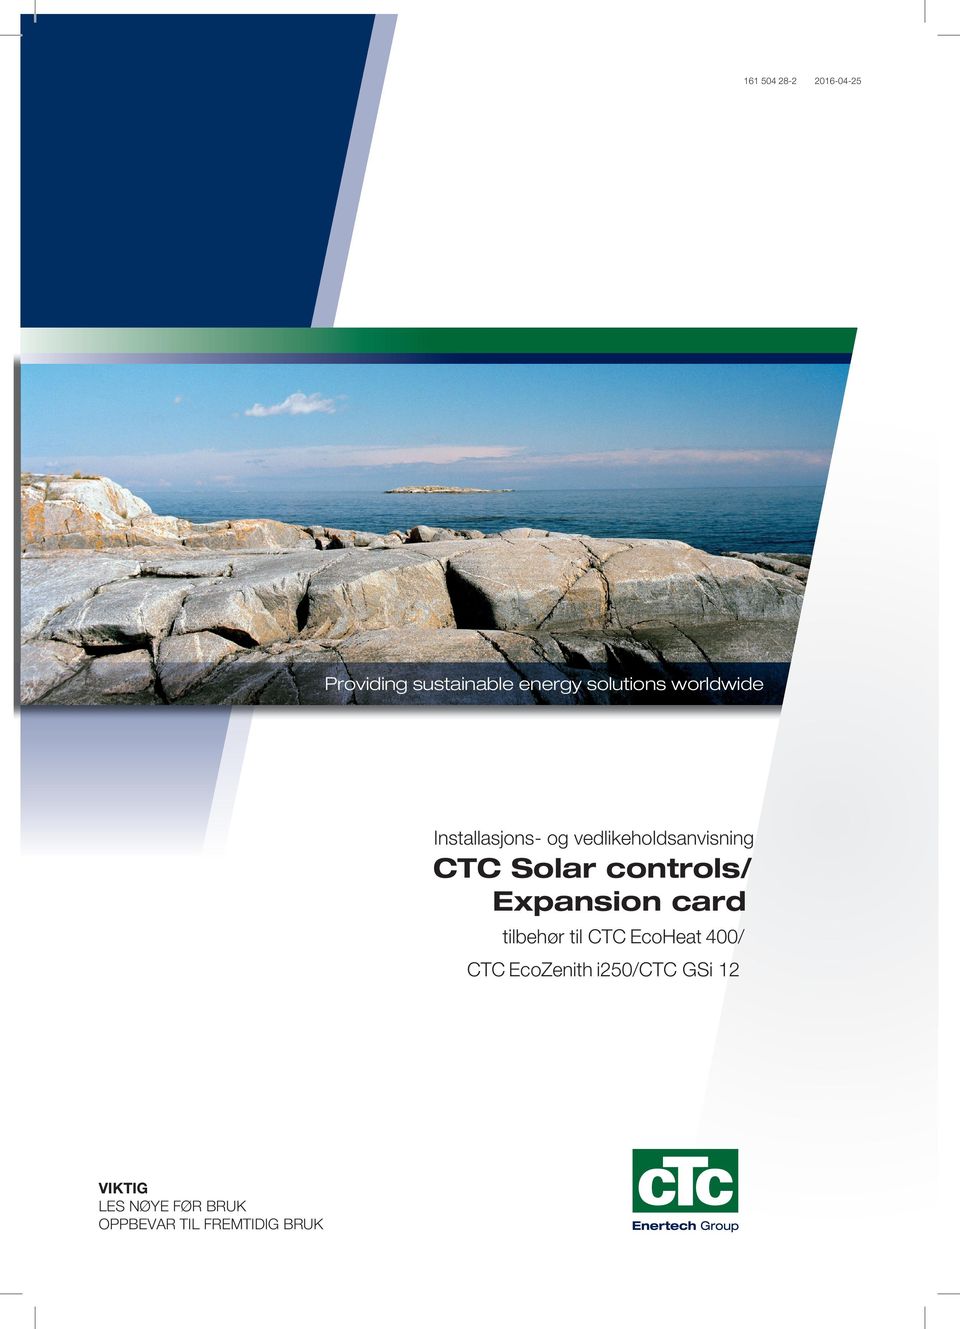 Expansion card tilbehør til CTC EcoHeat 400/ CTC EcoZenith